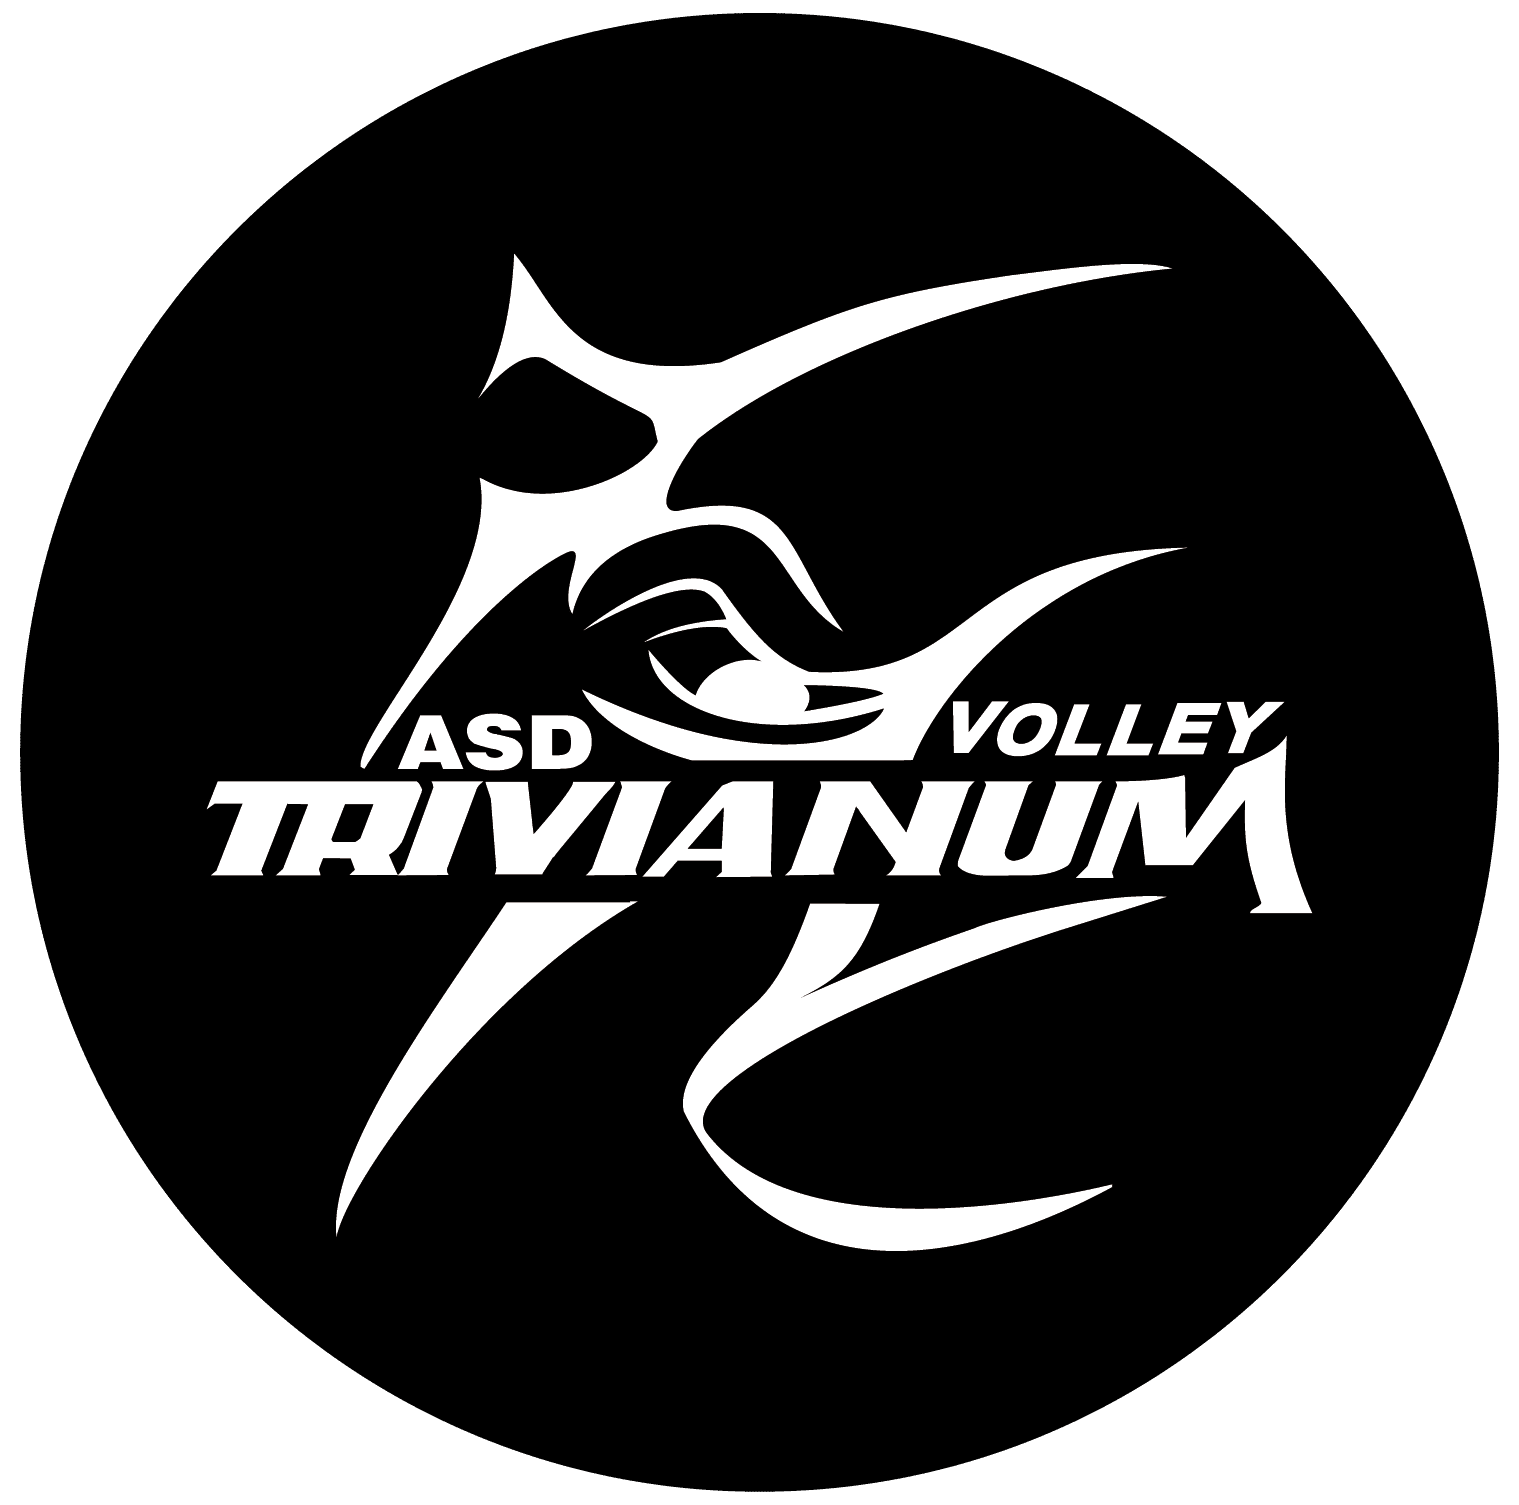 https://www.trivianum.com/wp-content/uploads/2022/09/trivianum-in-cerchio-01.png